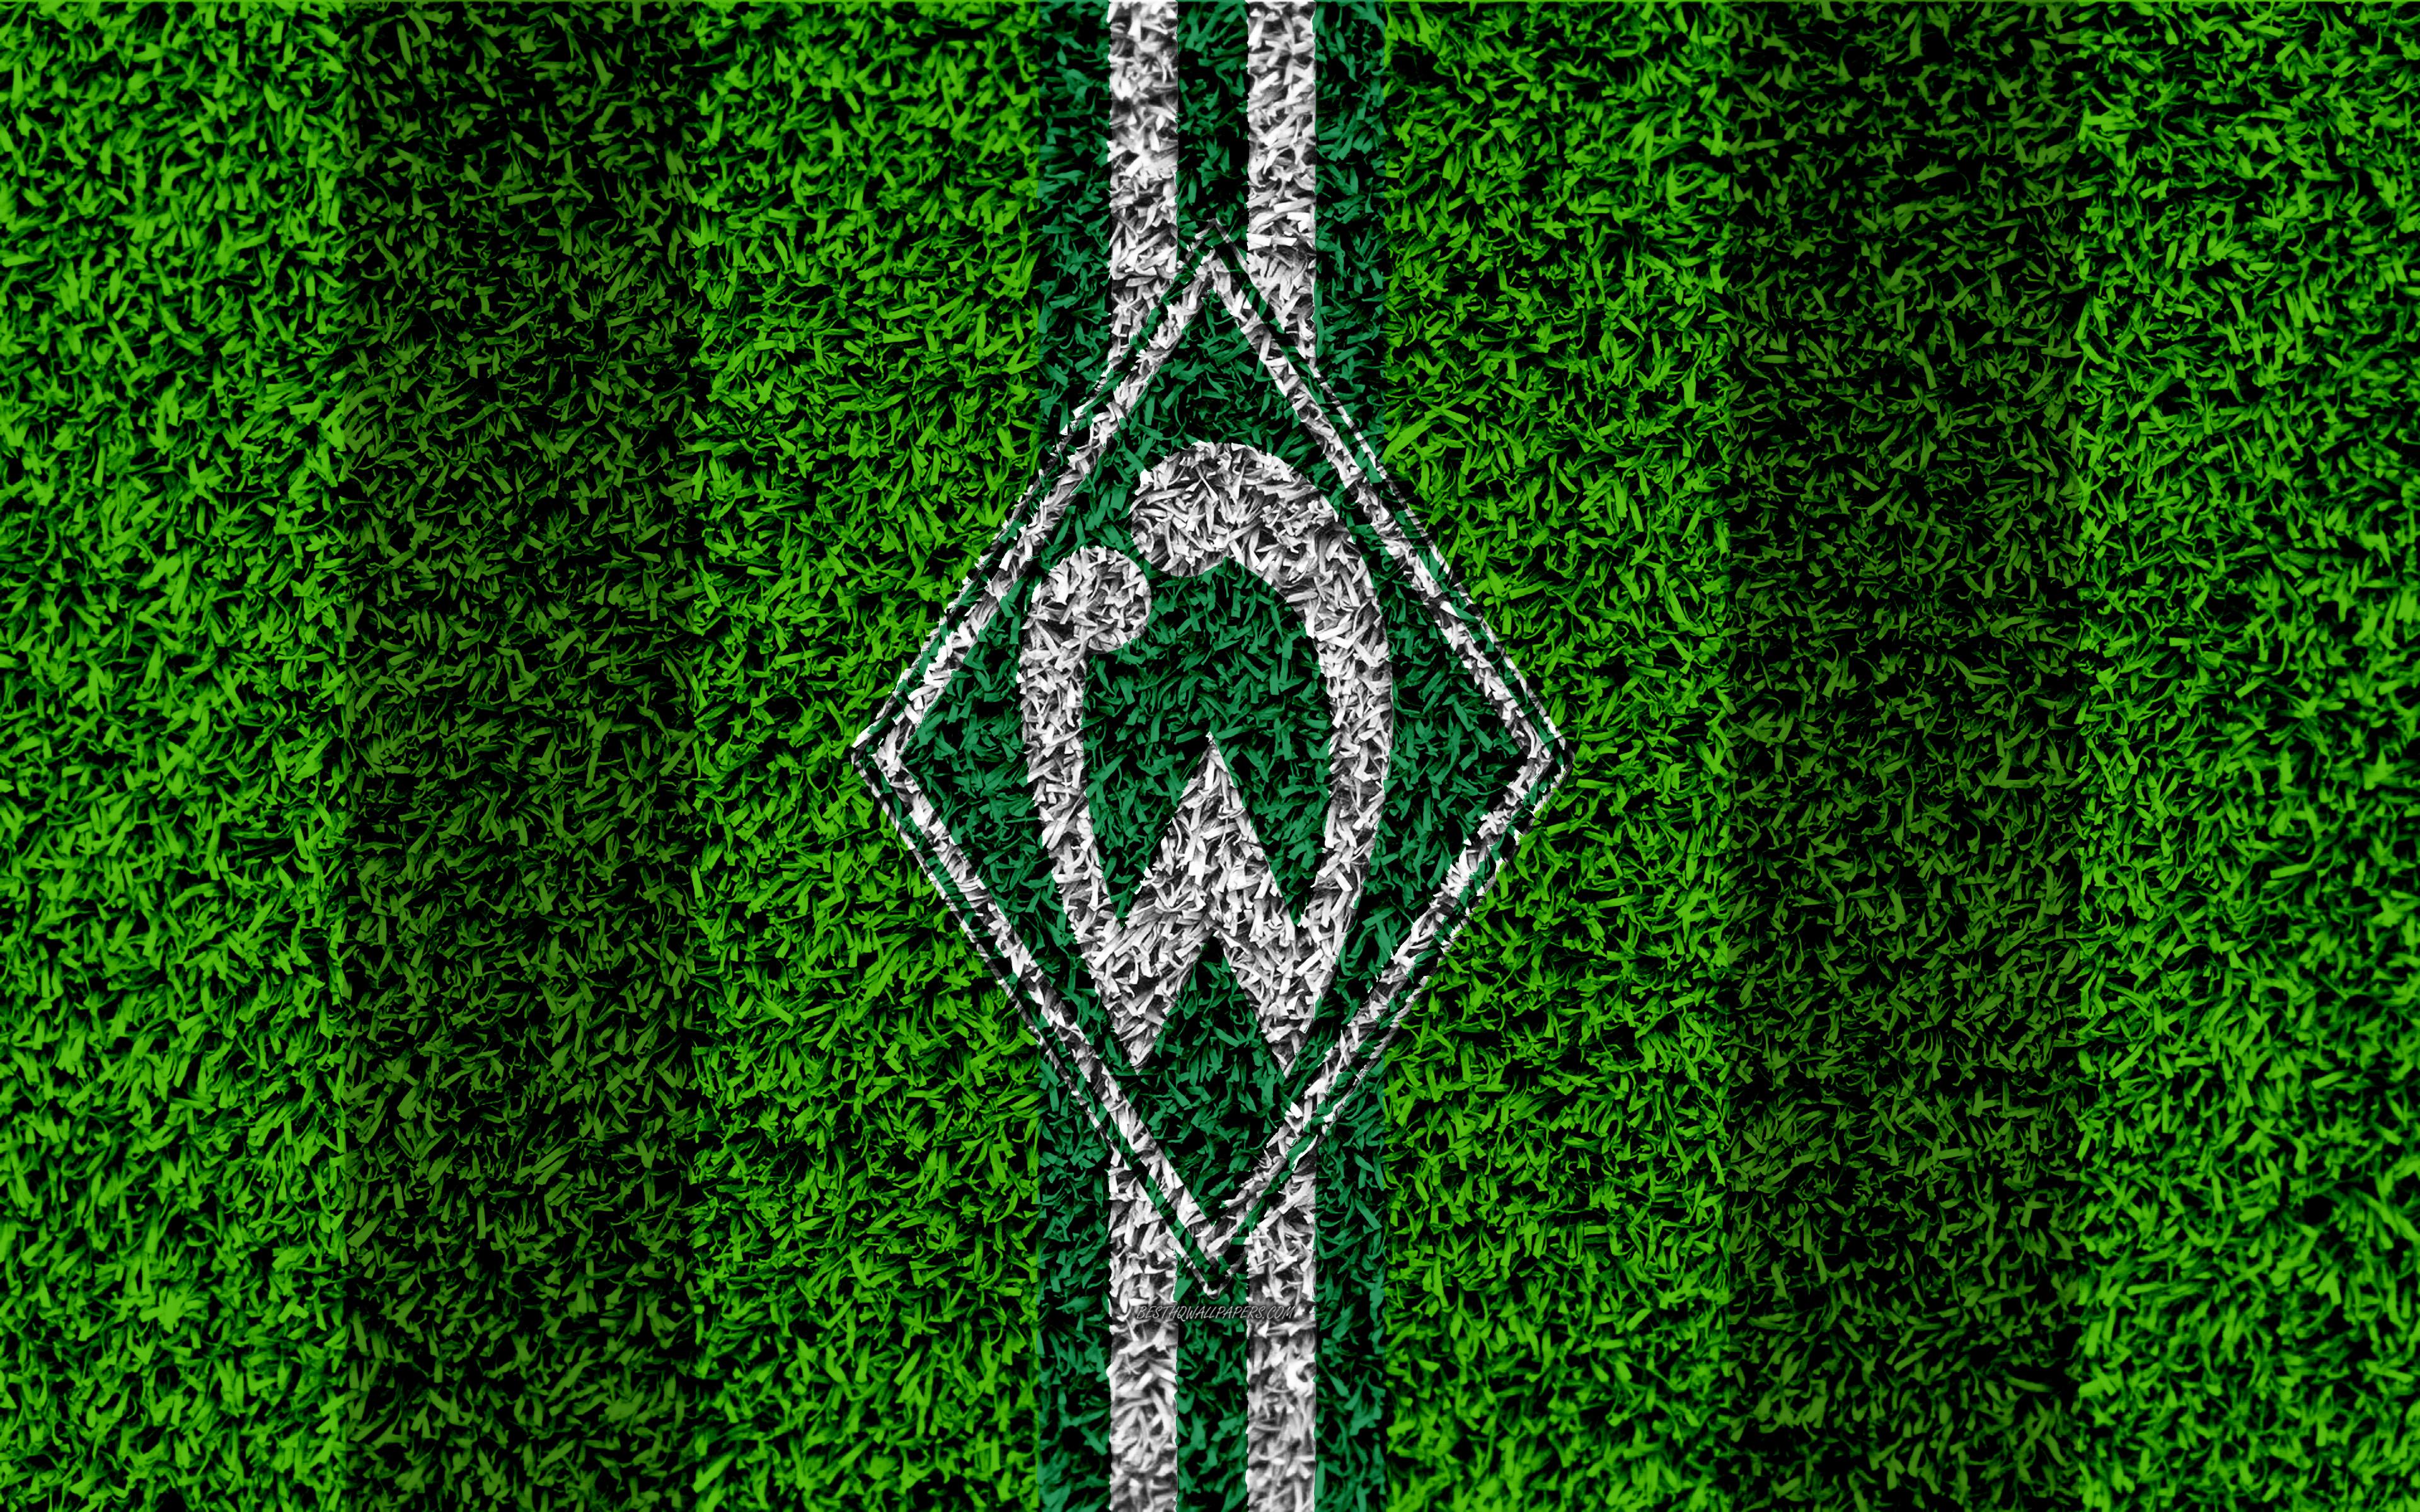 Download wallpaper Werder Bremen FC, 4k, German football club